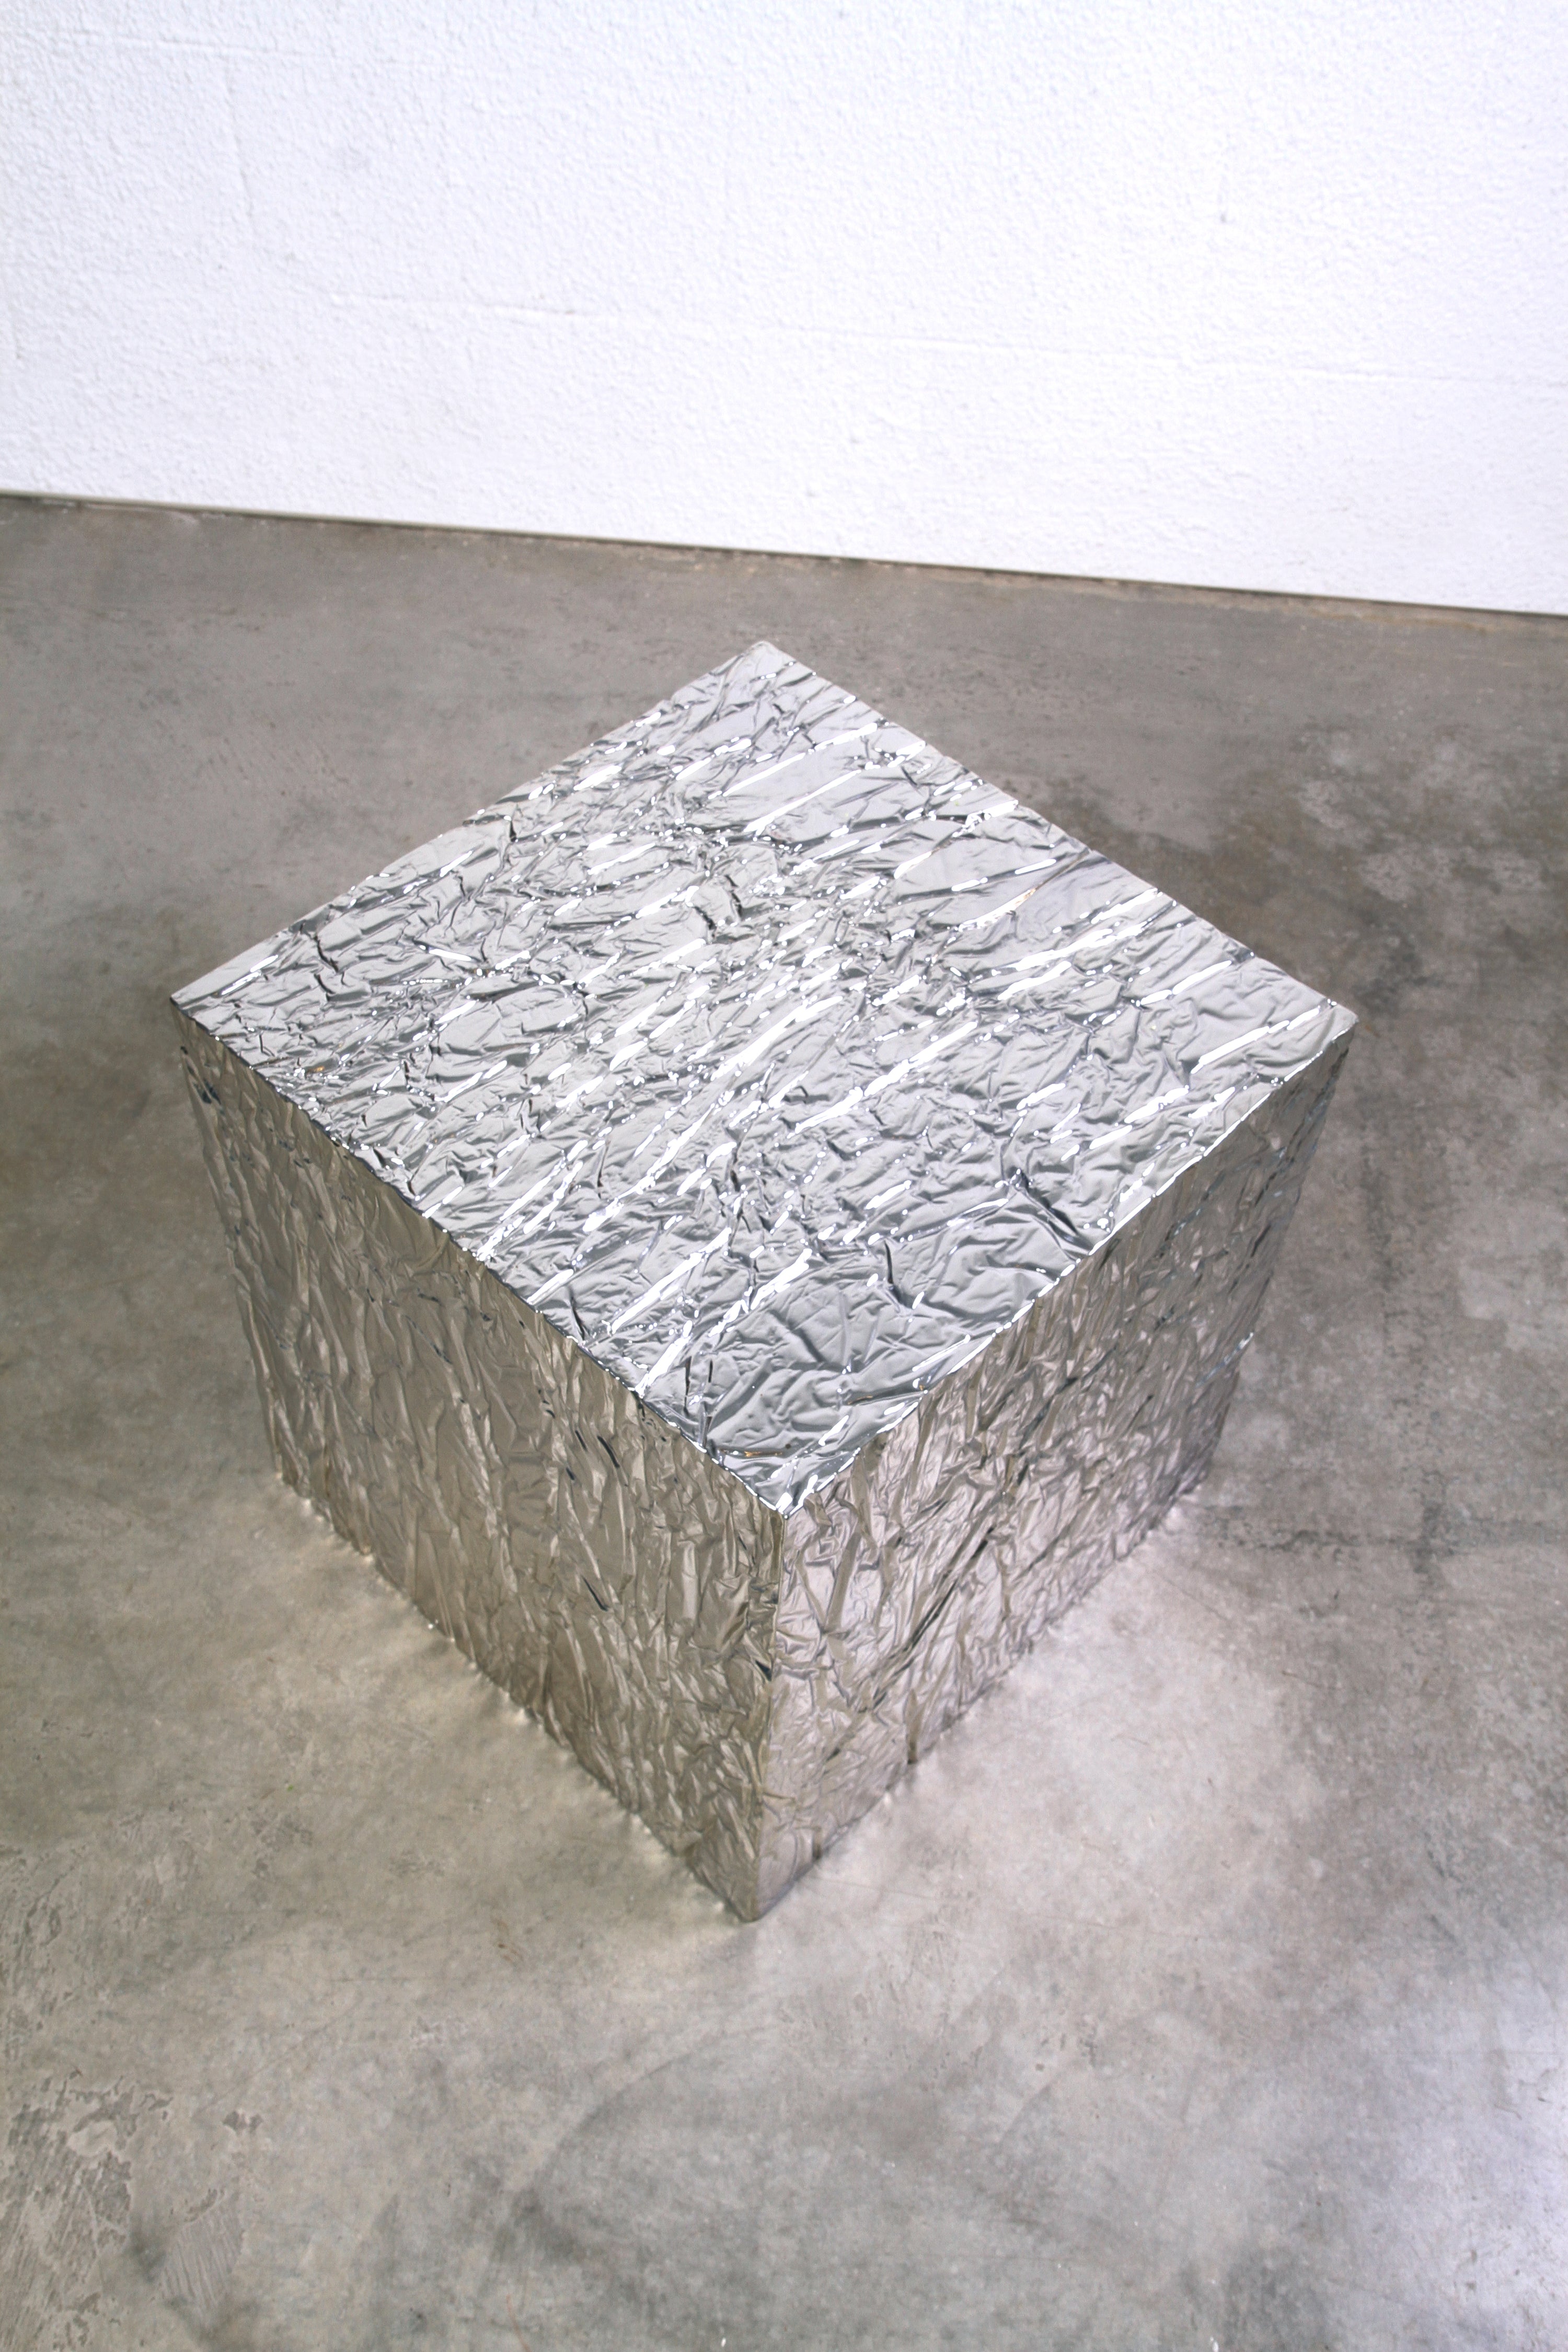 The RÉMY cube in Silver